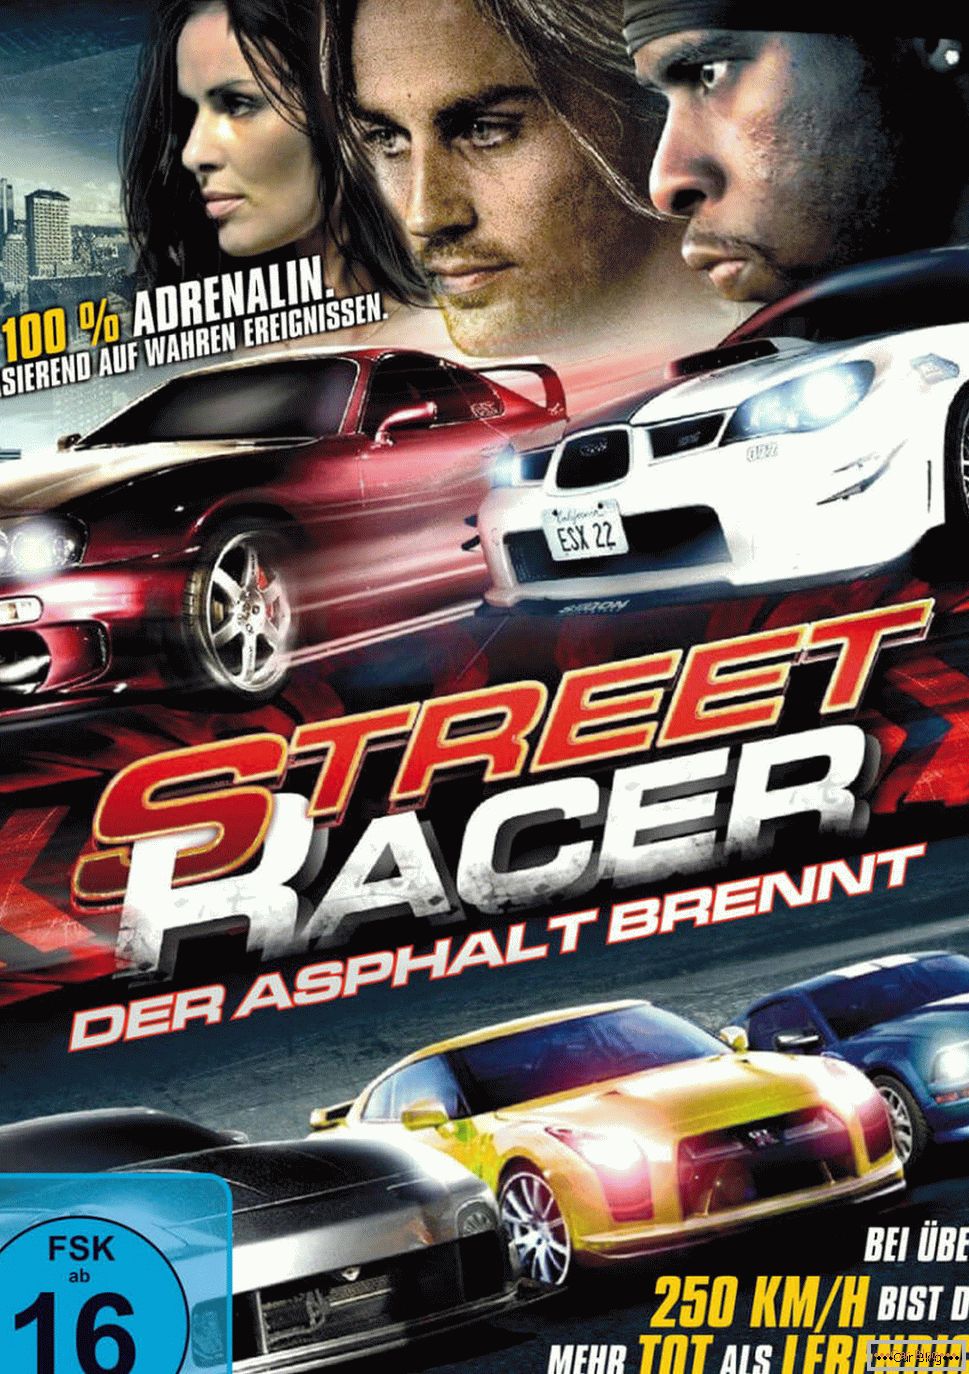 Plakát pro film Street Racer